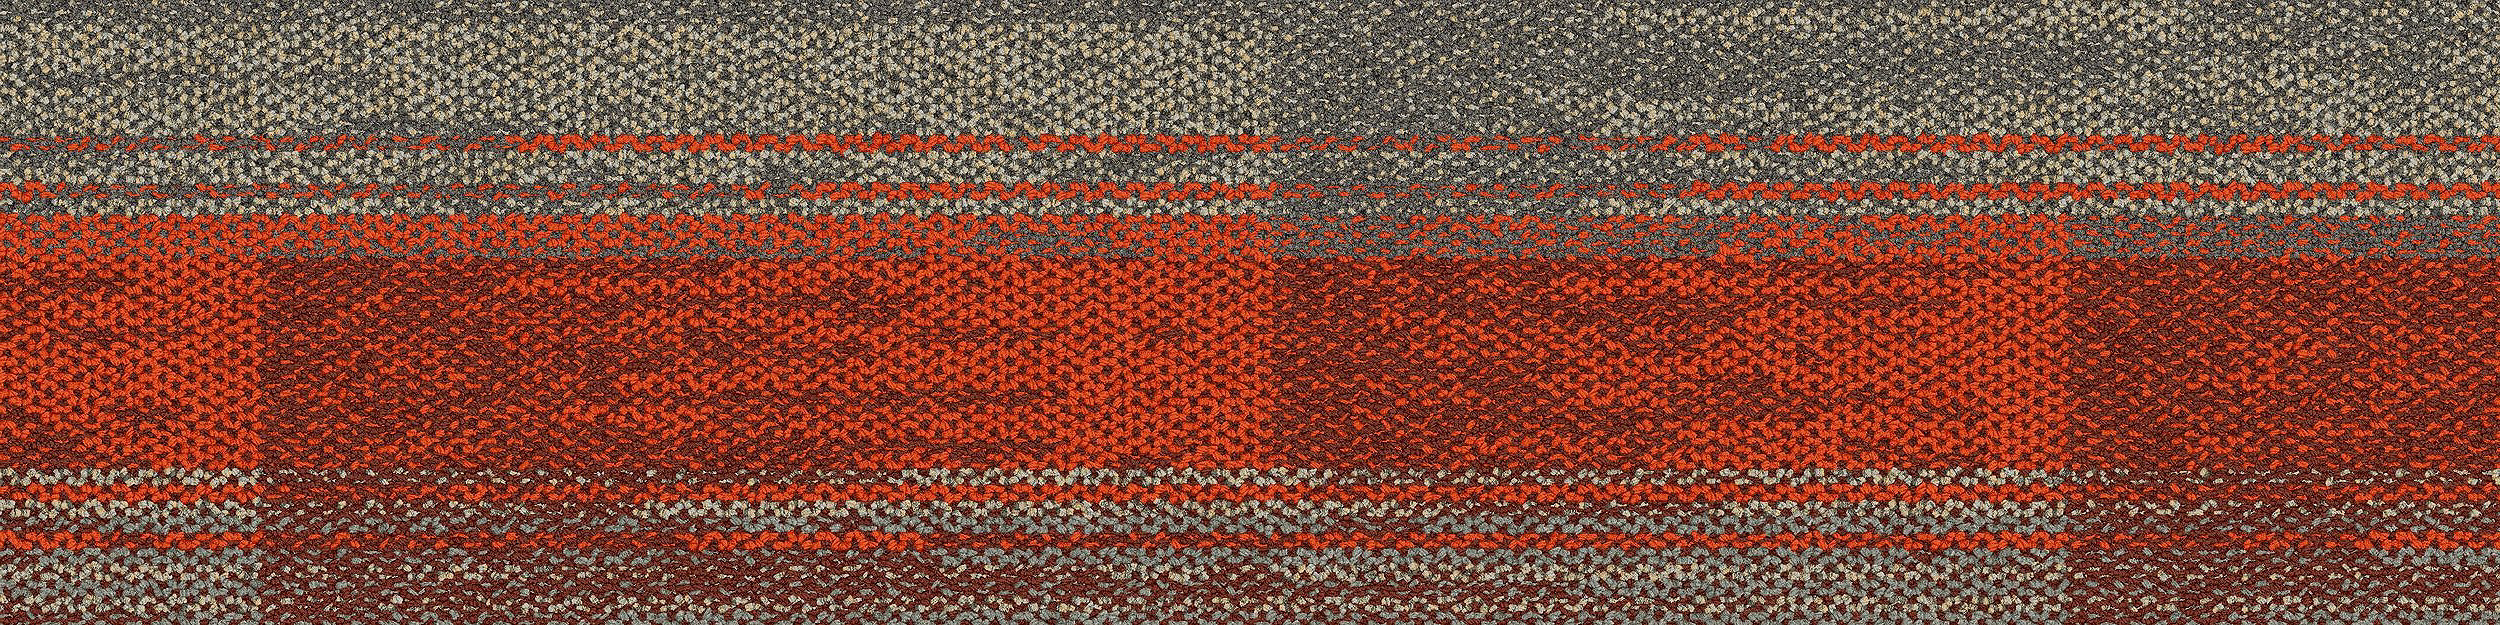 AE315 Carpet Tile In Greige/Persimmon imagen número 9